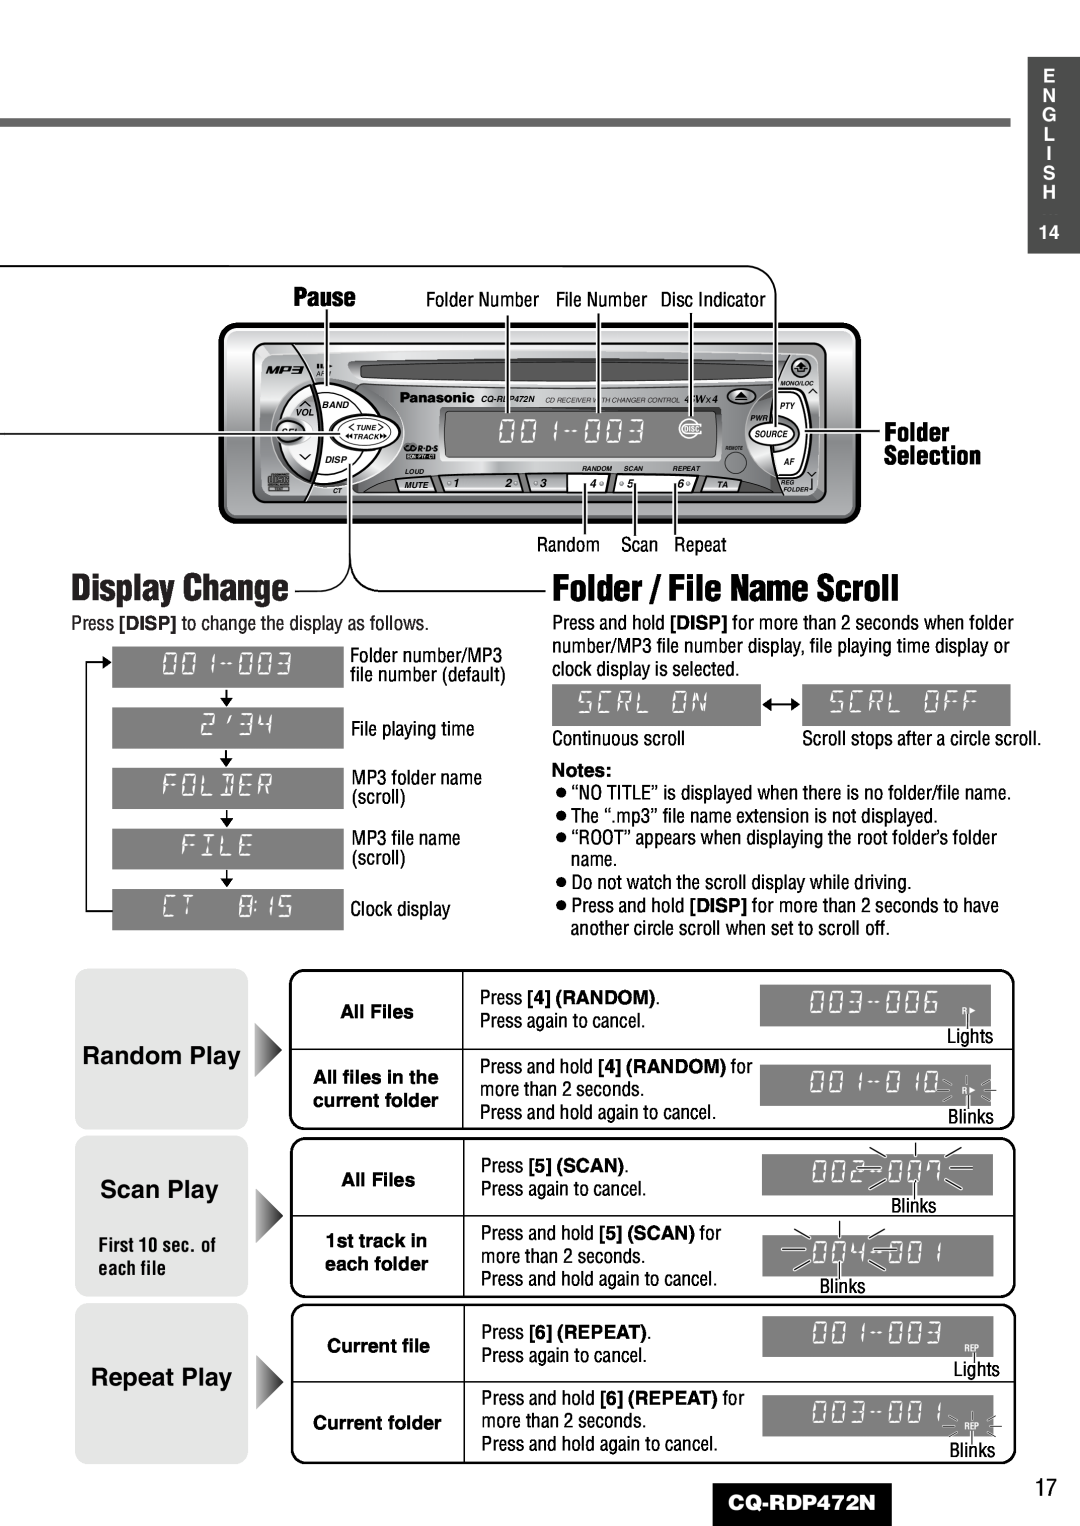 Panasonic CQ-RDP472N Display Change, Folder / File Name Scroll, 003-001¡ Rs, Random Play, Repeat Play, File playing time 